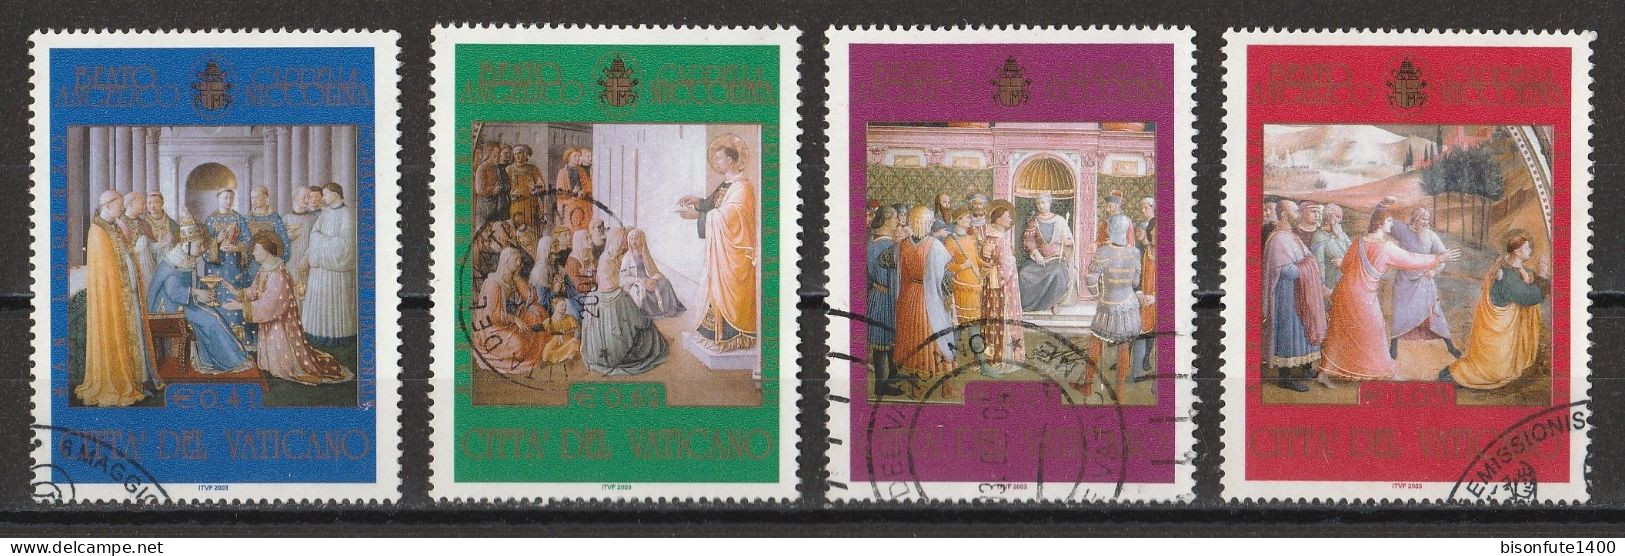 Vatican 2003 : Timbres Yvert & Tellier N° 1309 - 1310 - 1311 Et 1312 Oblitérés. - Gebraucht